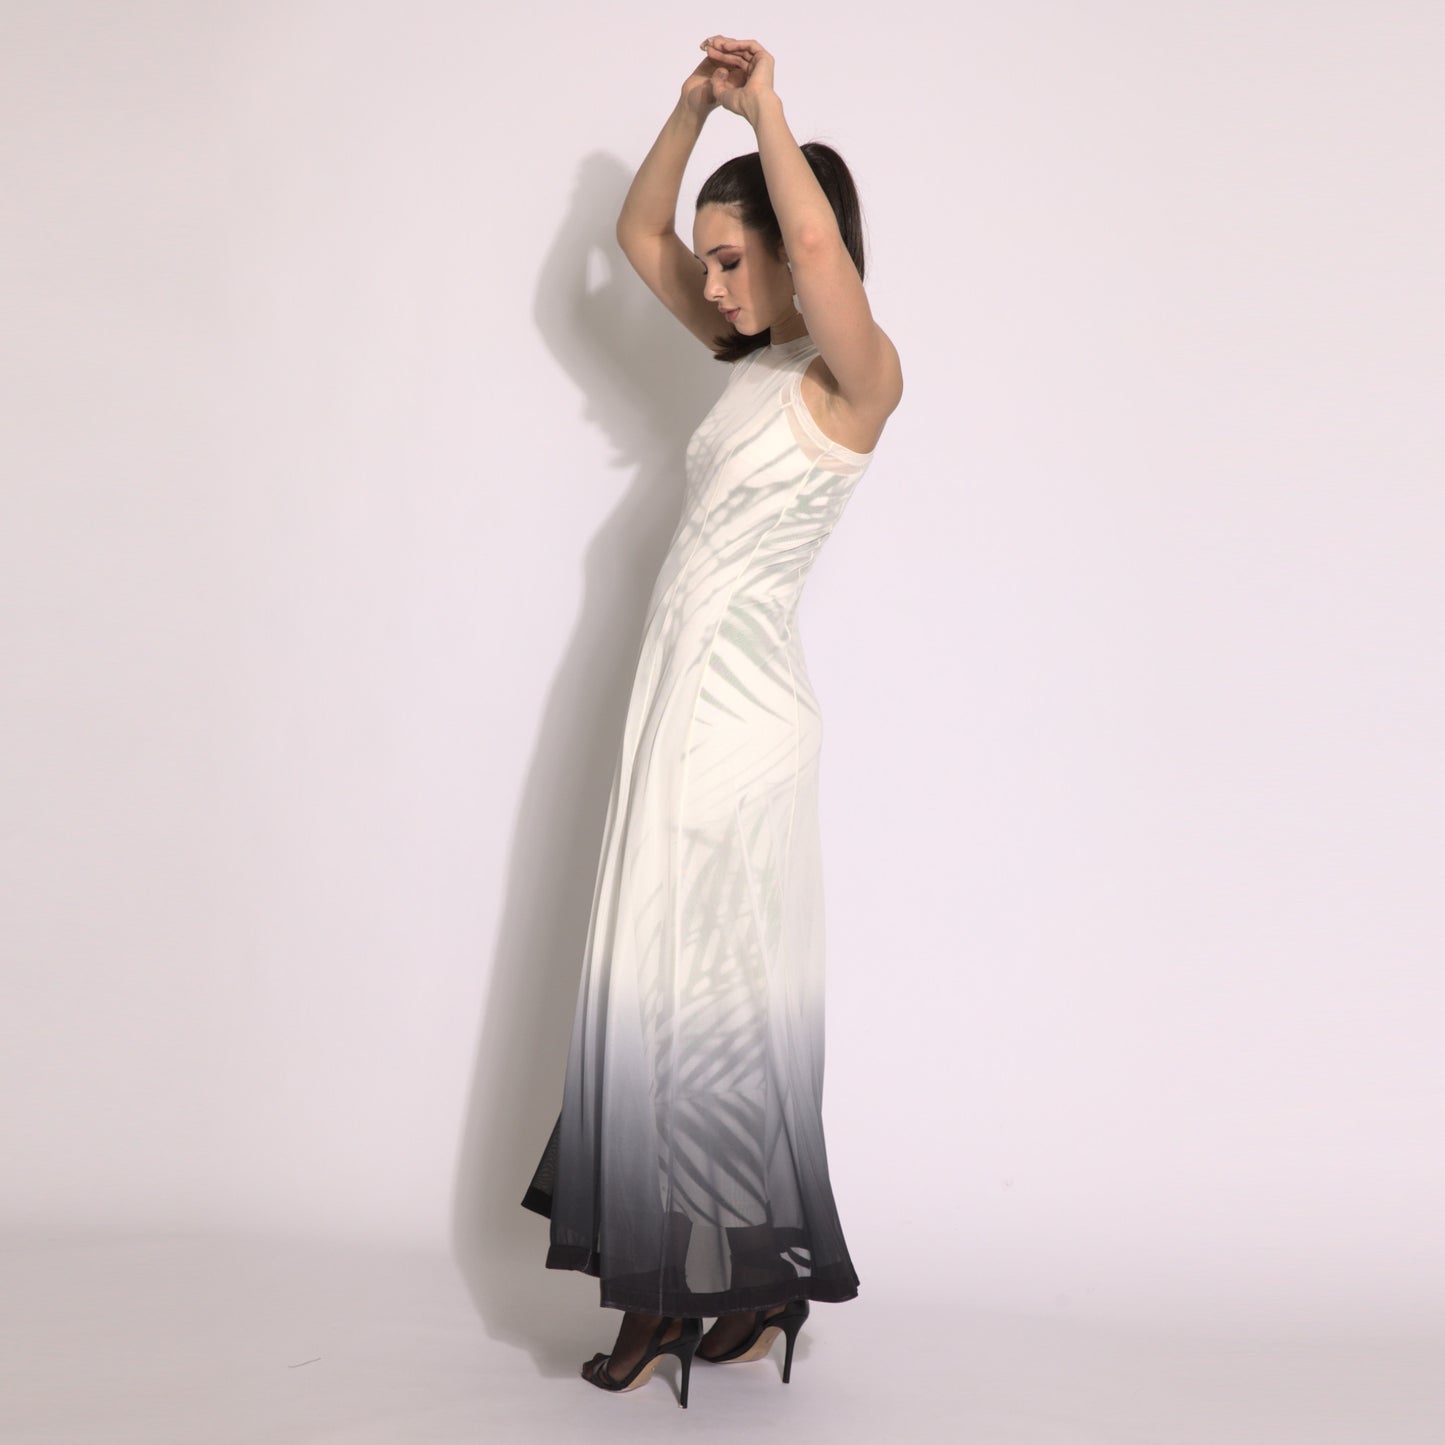 Mesh Dress - Fading effect tulle dress (second skin)